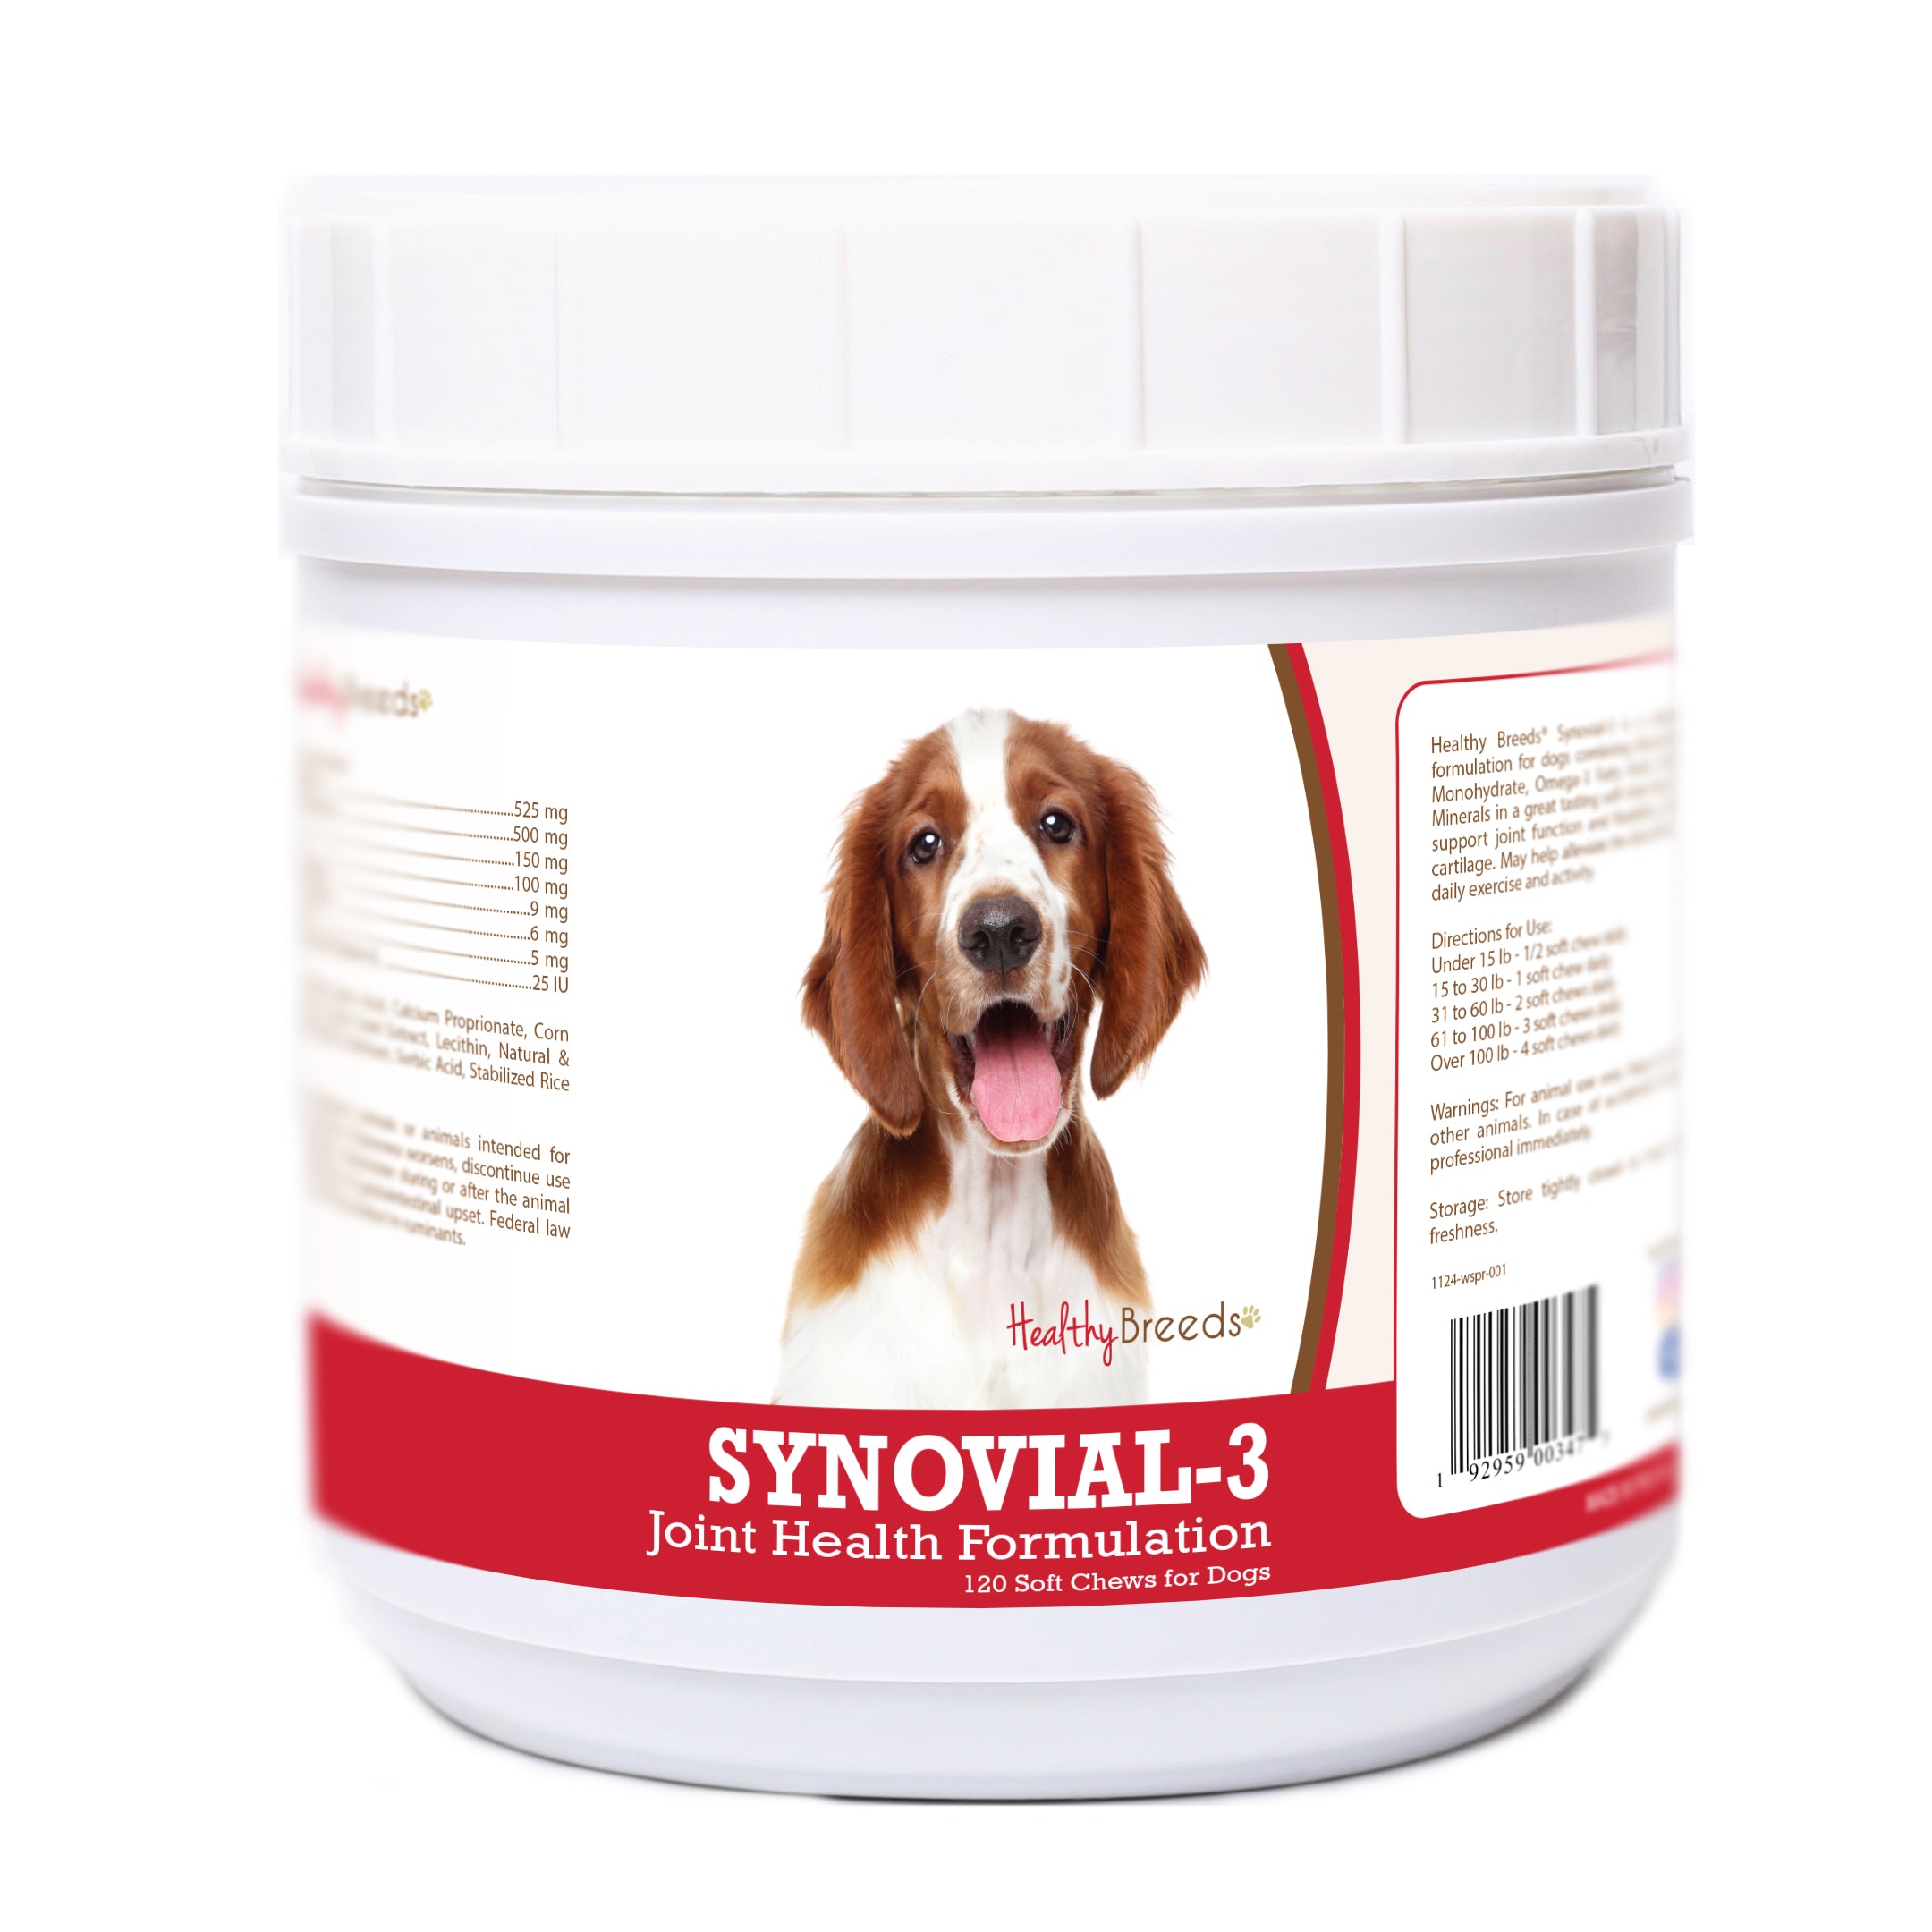 Welsh Springer Spaniel Synovial-3 Joint Health Formulation Soft Chews 120 Count